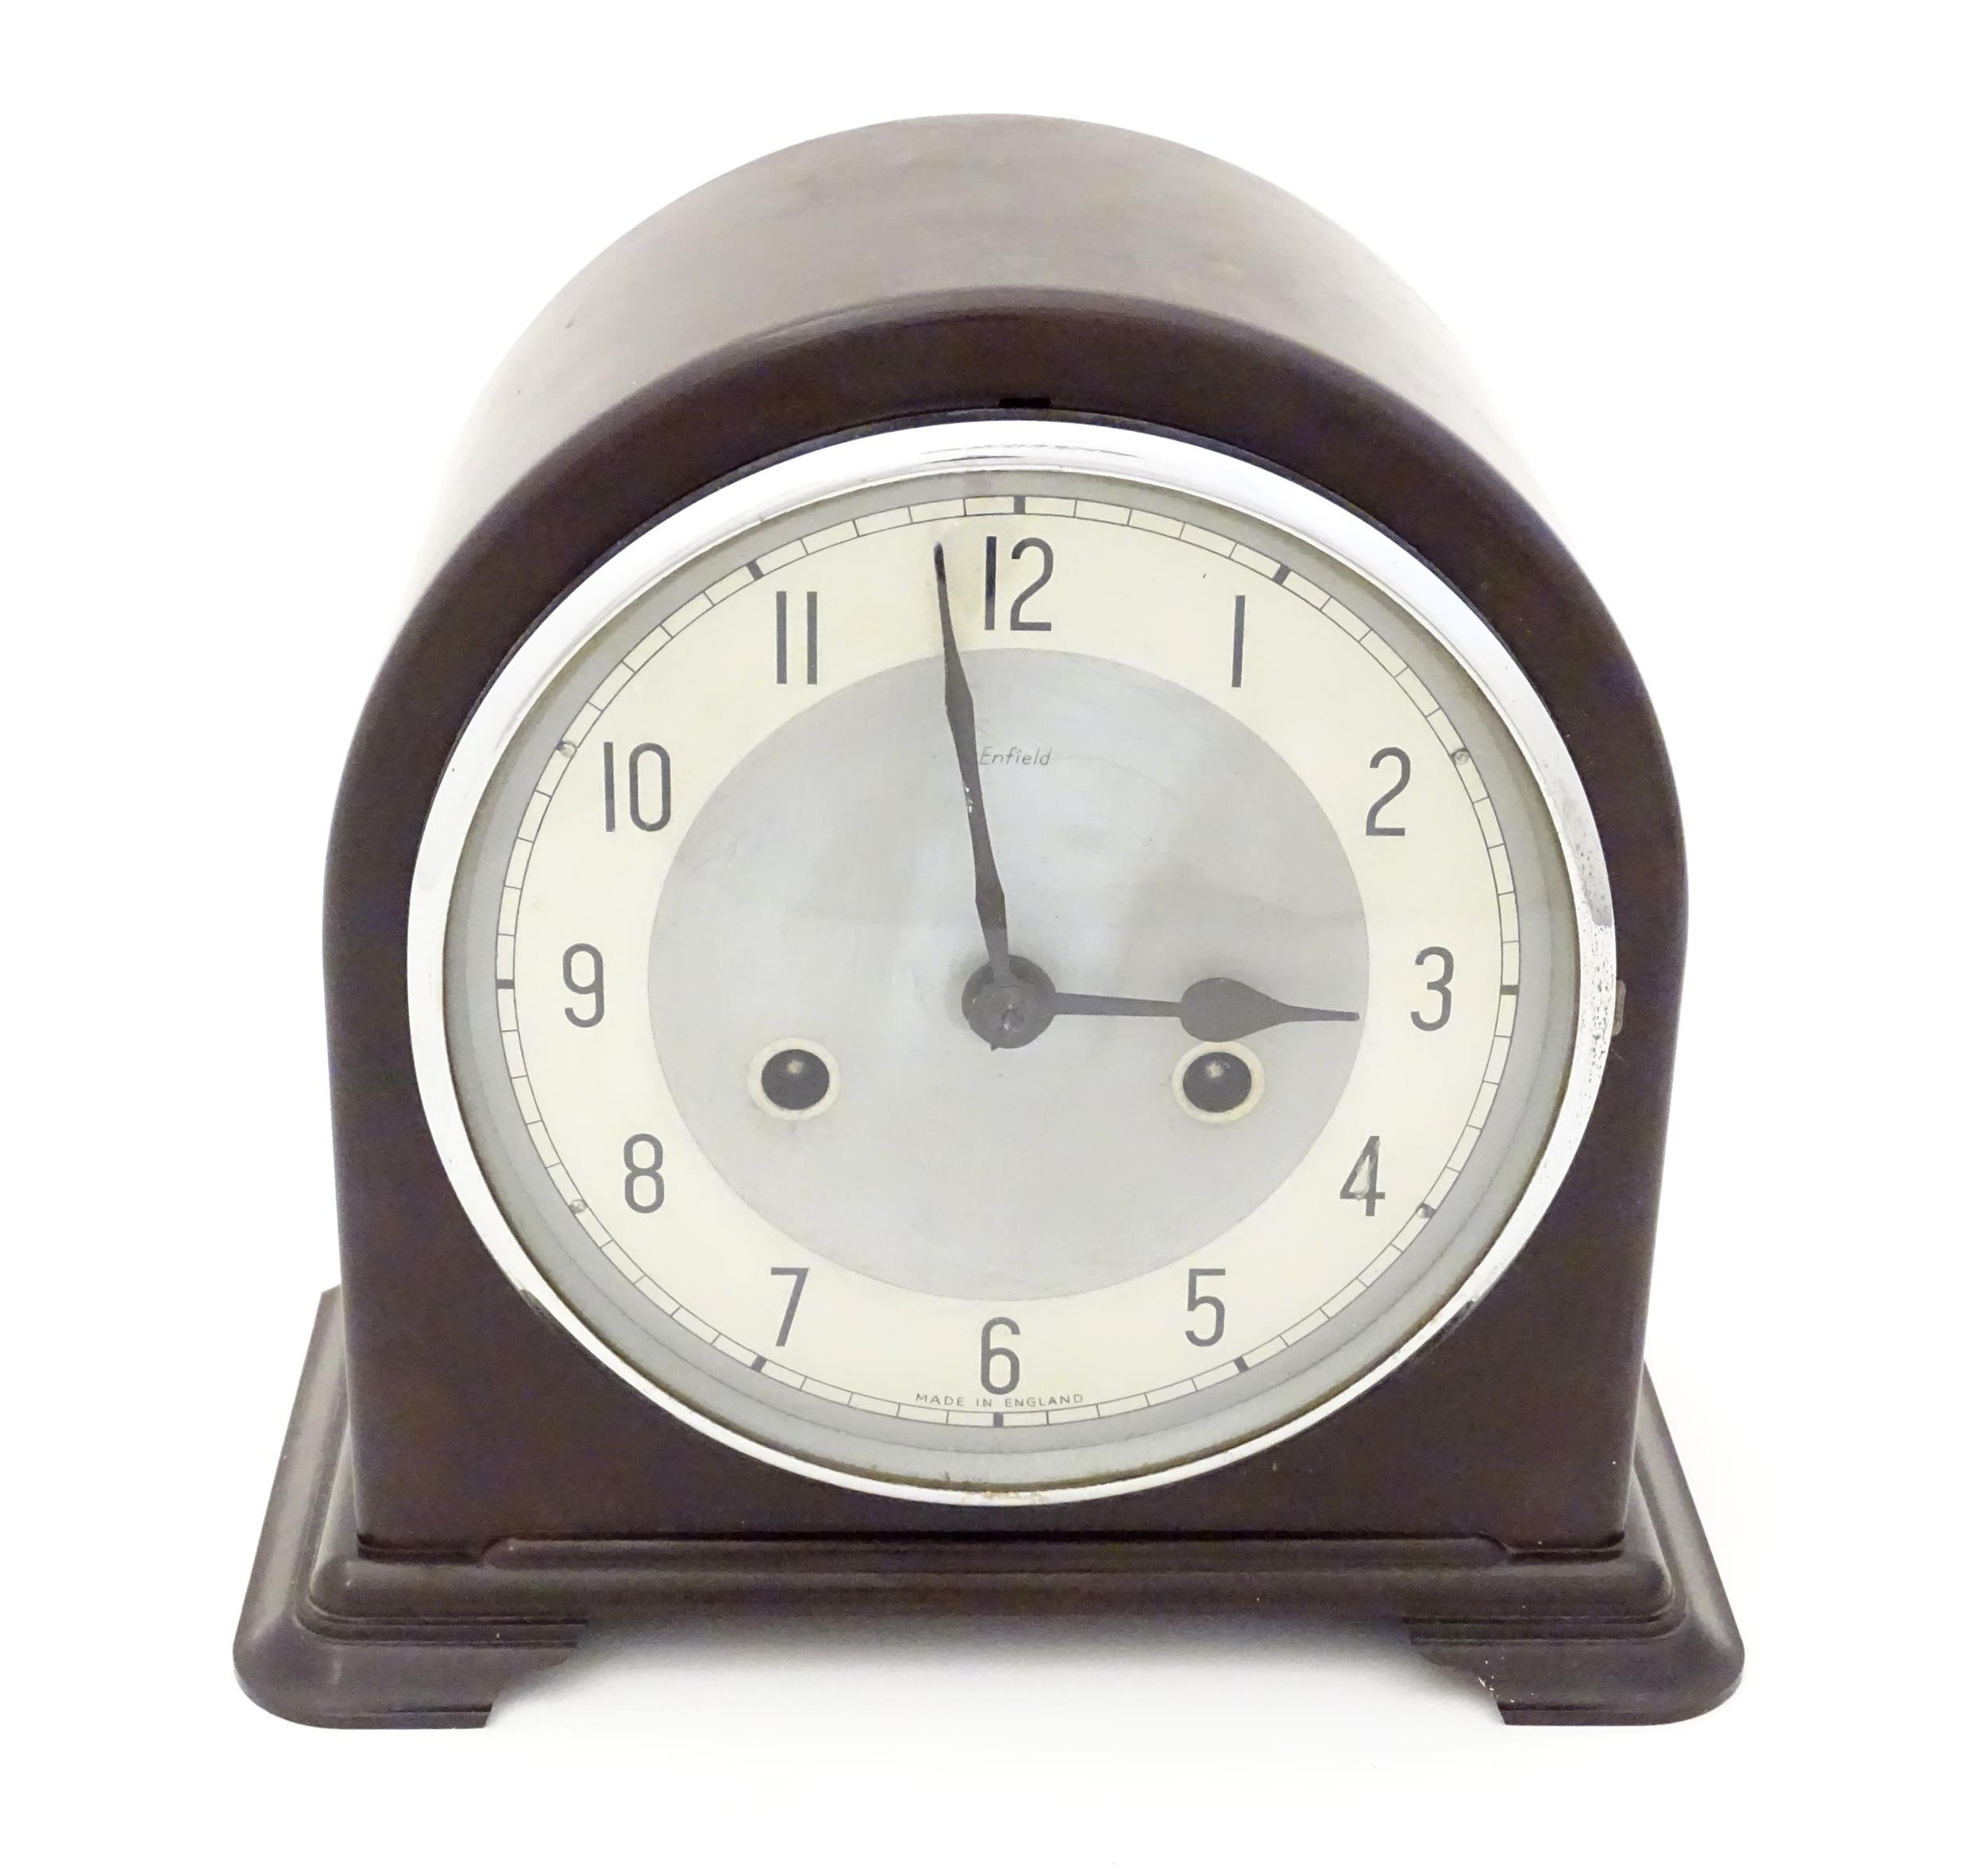 An Art Deco Smiths Enfield Bakelite cased mantel clock 8" high Please Note - we do not make